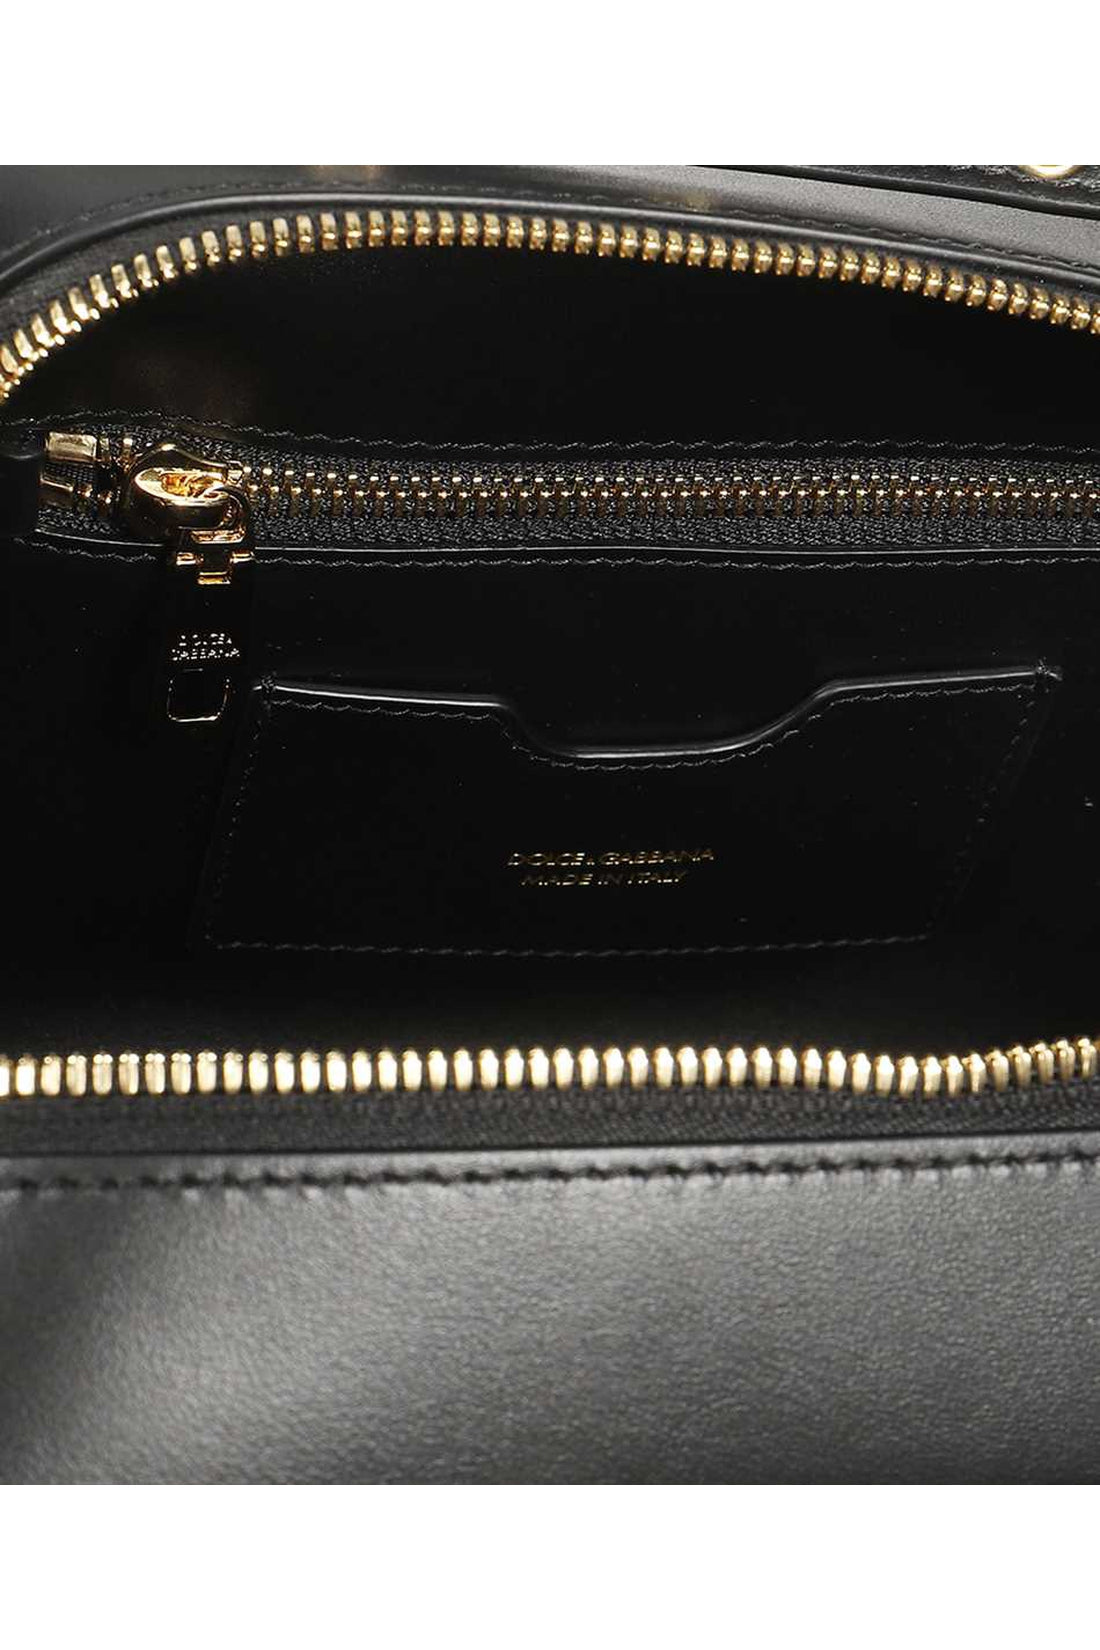 Dolce & Gabbana-OUTLET-SALE-3.5 leather crossbody bag-ARCHIVIST